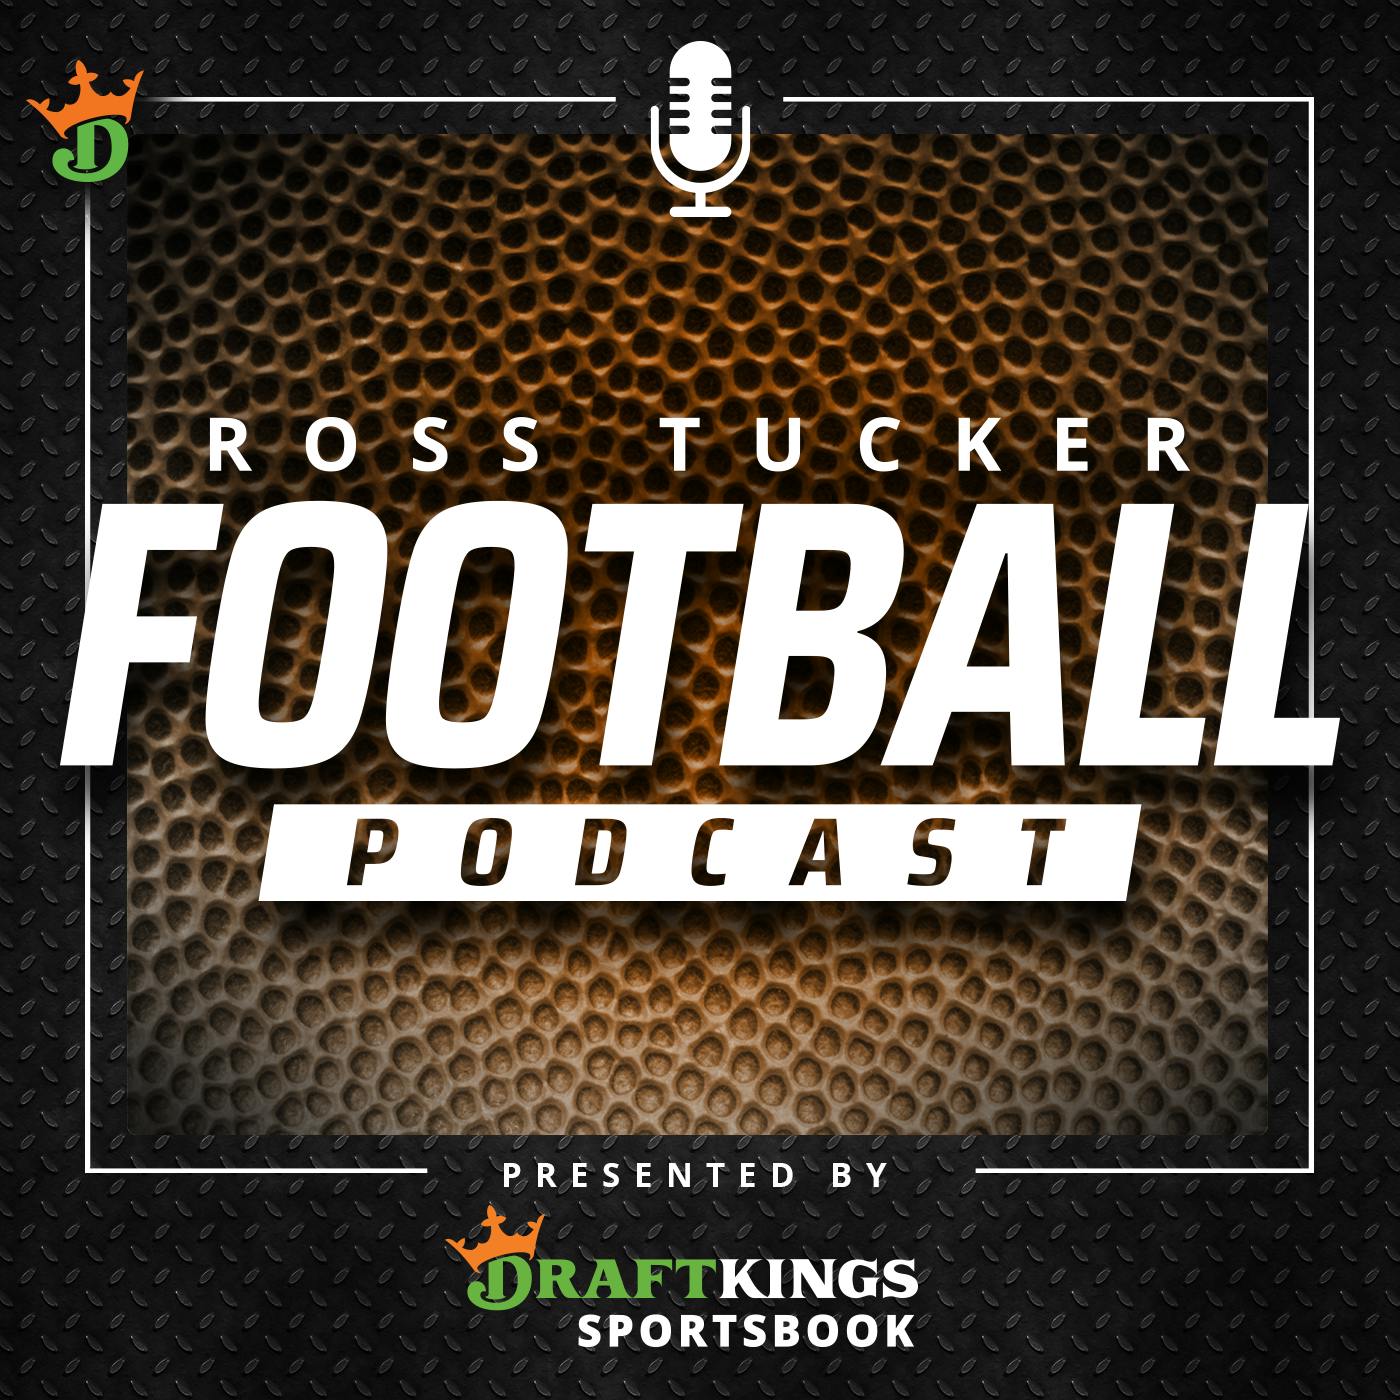 Ross Tucker Football Podcast podcast